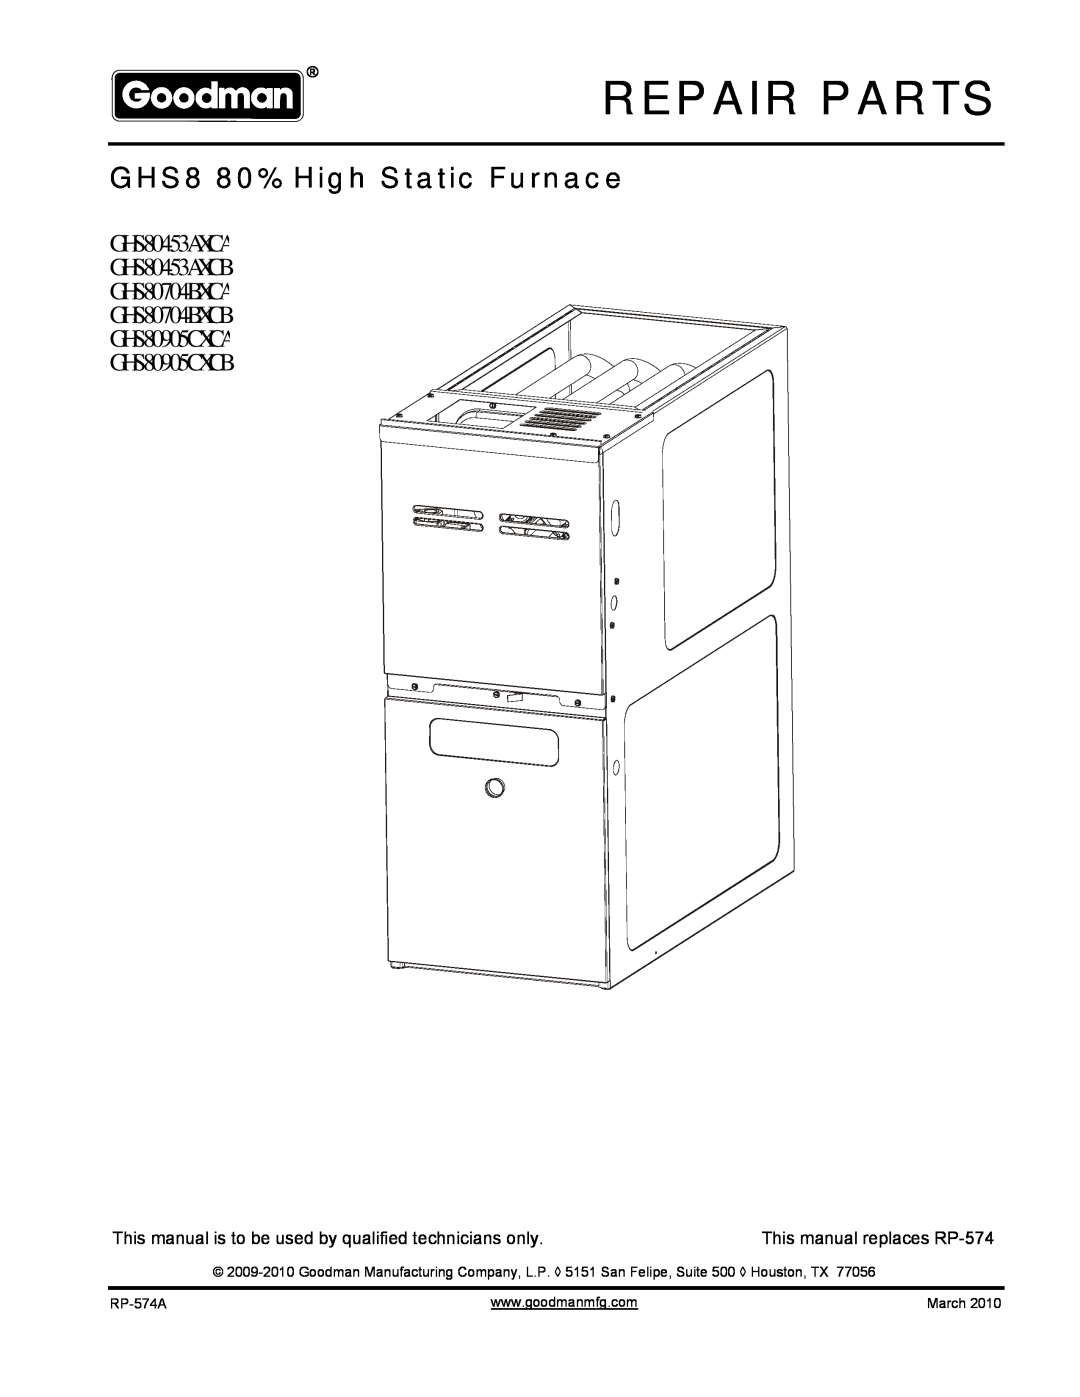 Goodman Mfg manual Repair Parts, GHS8 80% High Static Furnace, GHS80453AXCA GHS80453AXCB GHS80704BXCA, RP-574A, March 